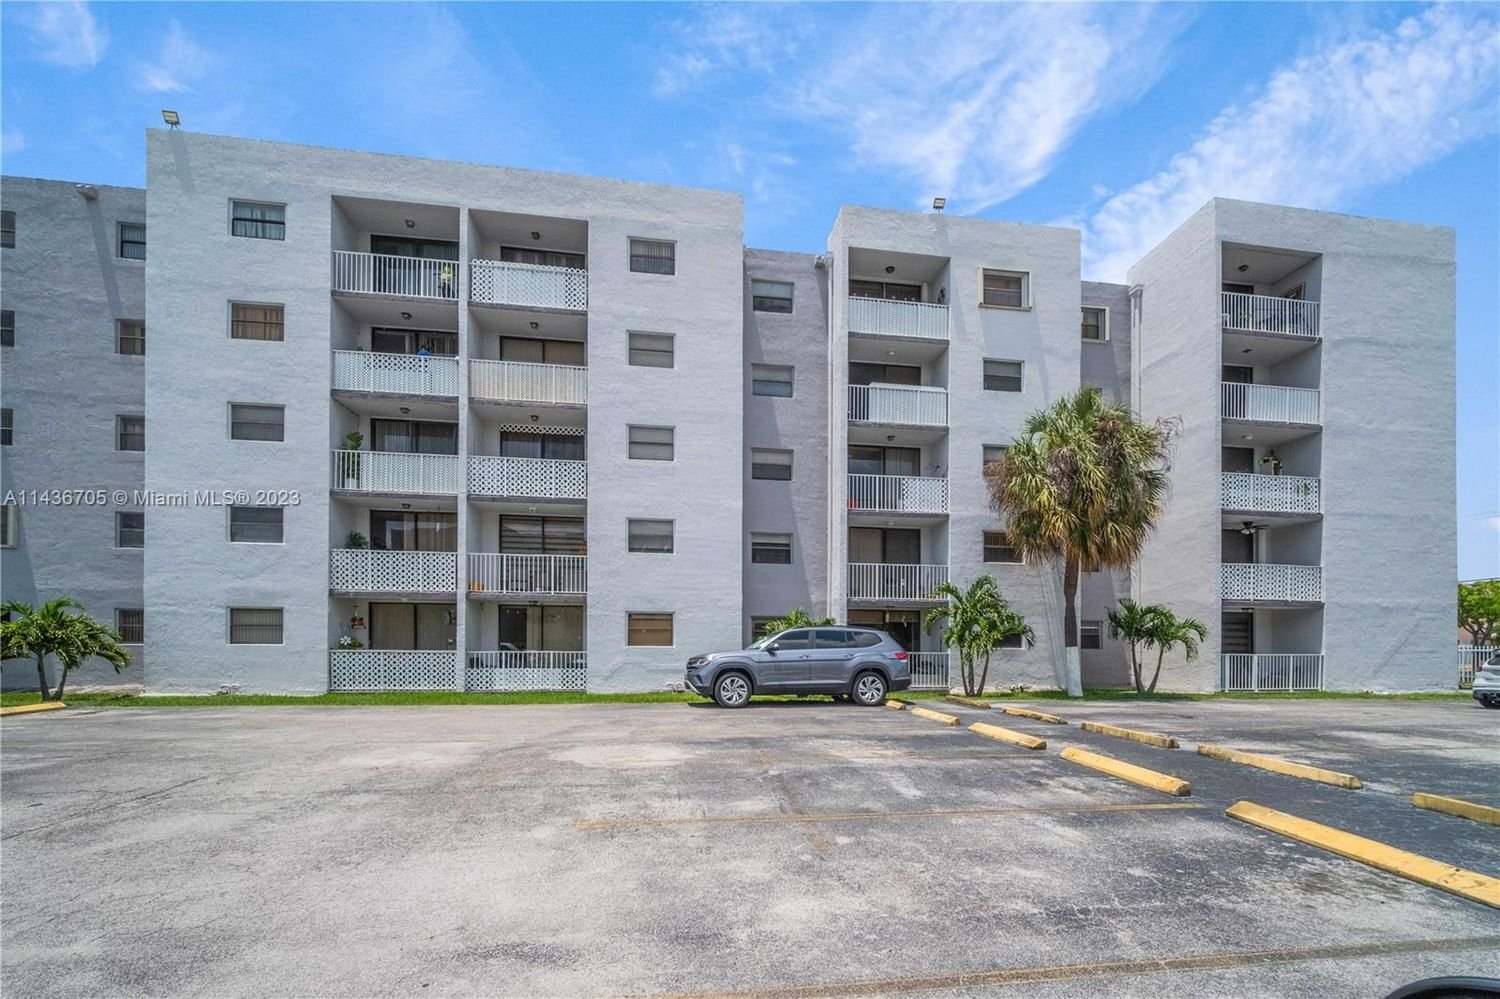 Real estate property located at 8075 7th St #416, Miami-Dade County, Miami, FL